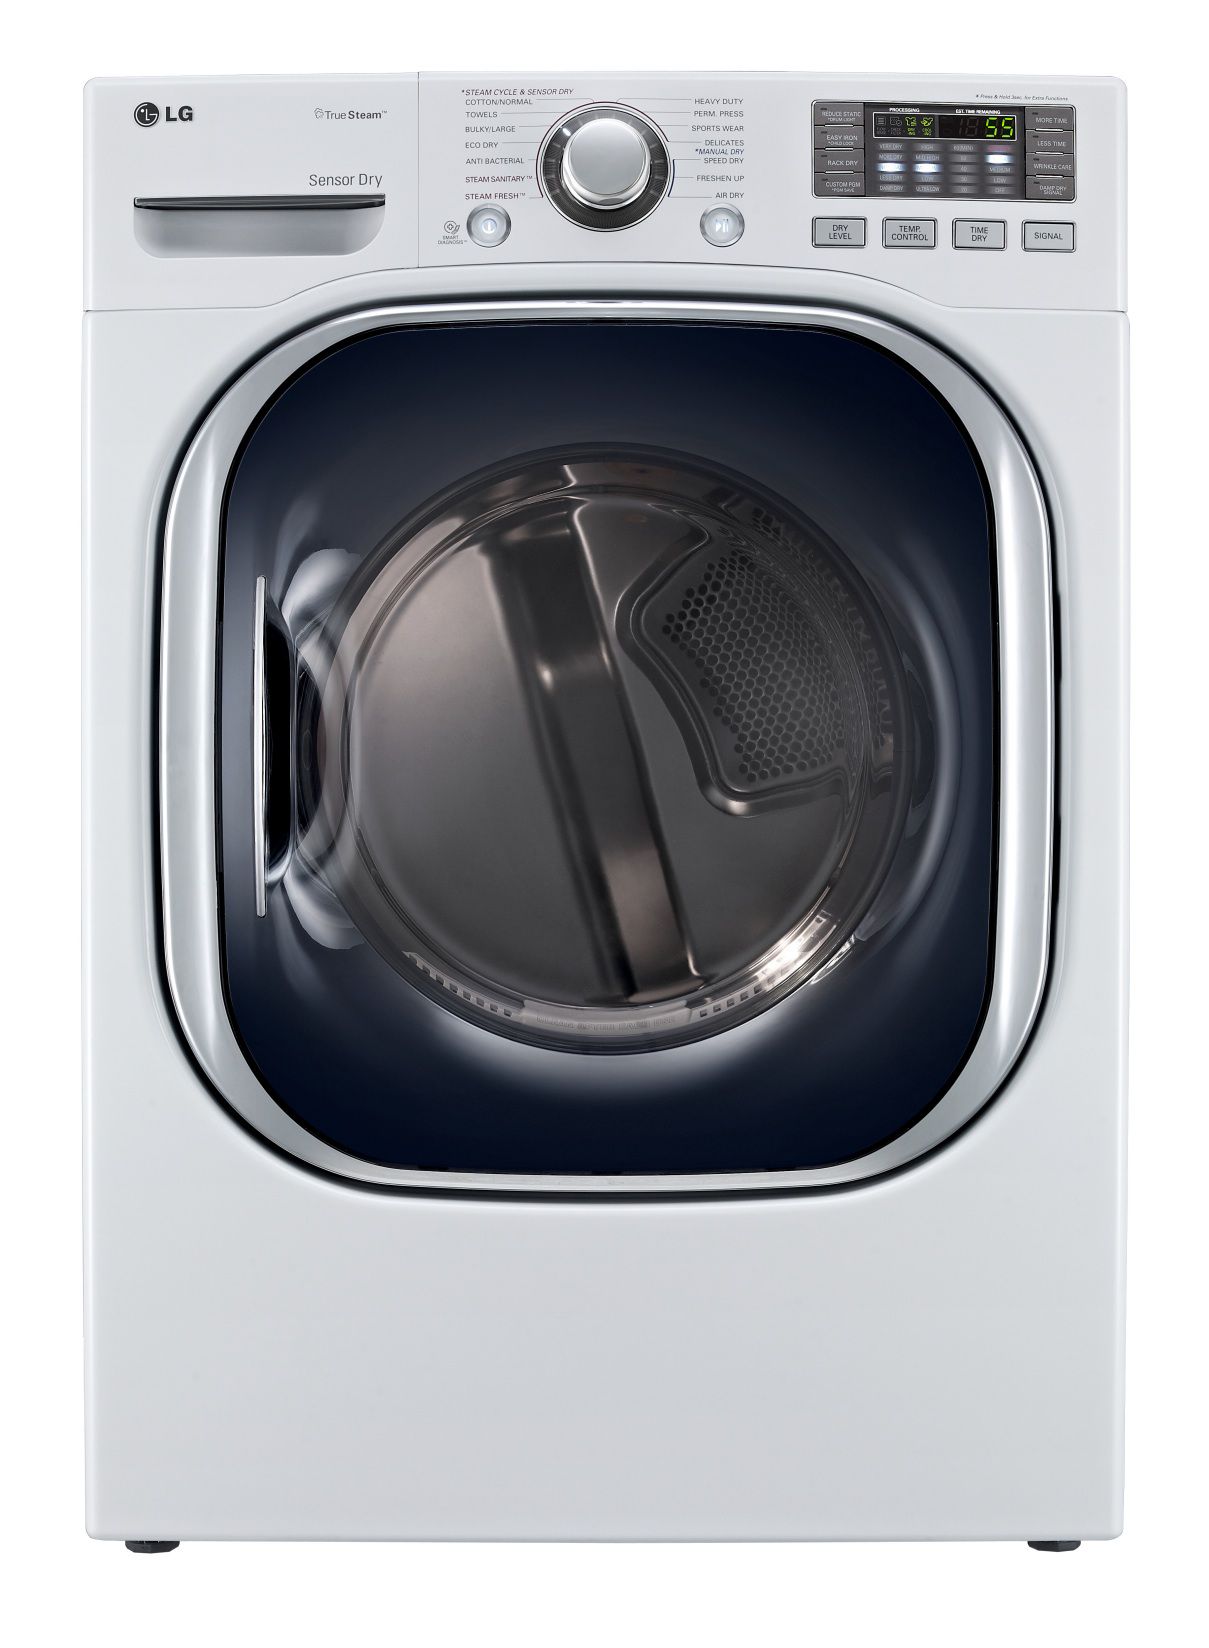 LG 7.4 cu. ft. Steam Electric Dryer - White